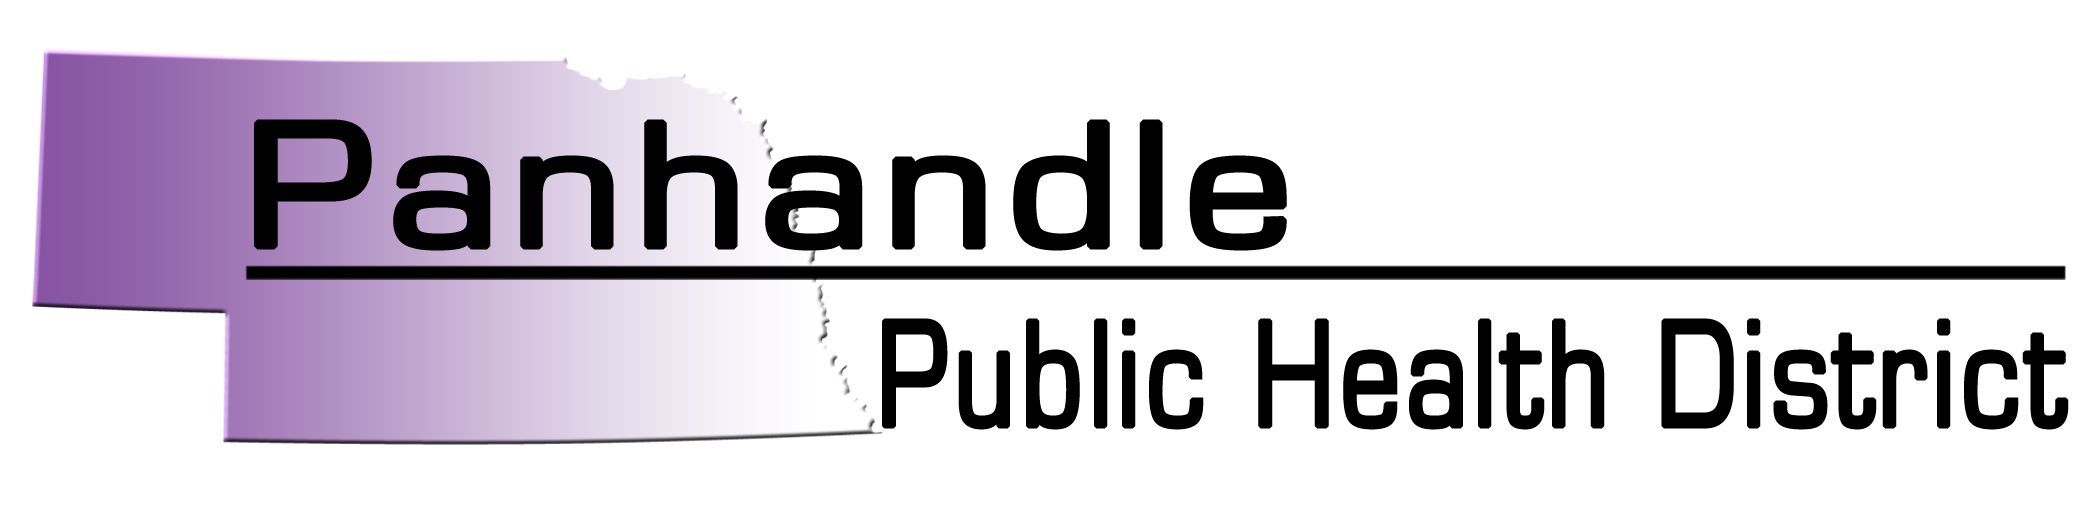 Panhandle Public Health District